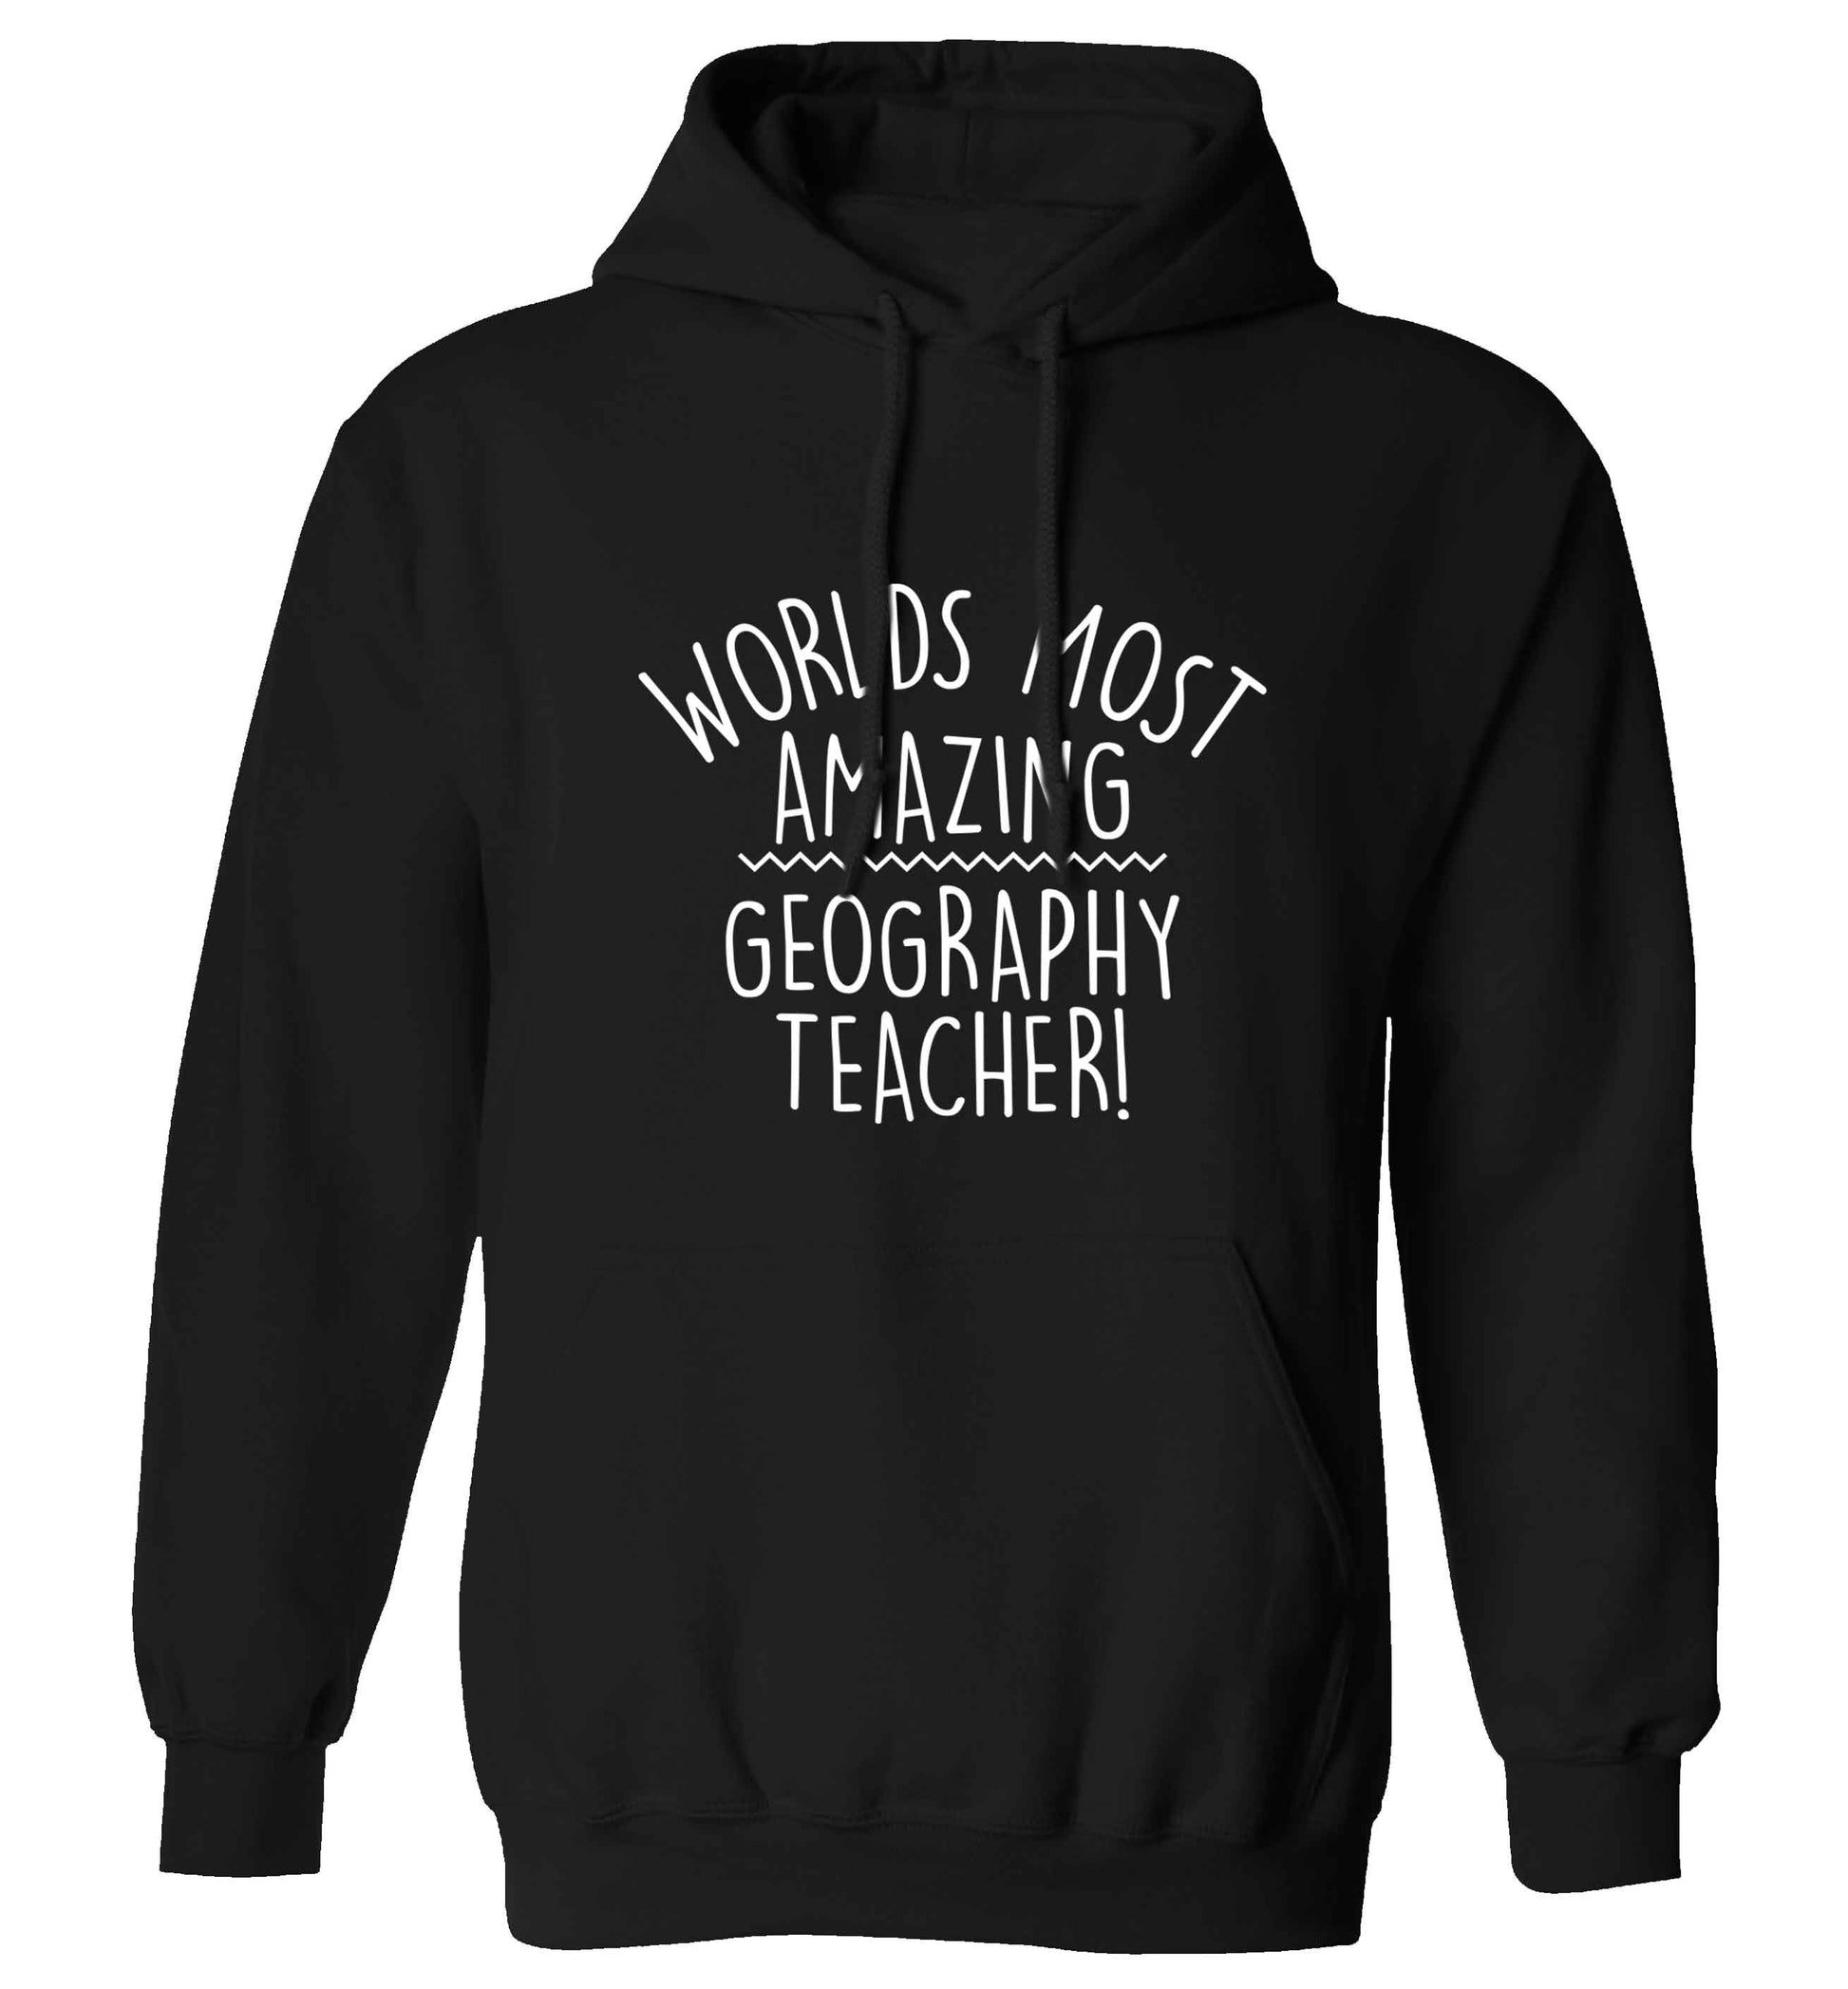 Worlds most amazing geography teacher adults unisex black hoodie 2XL